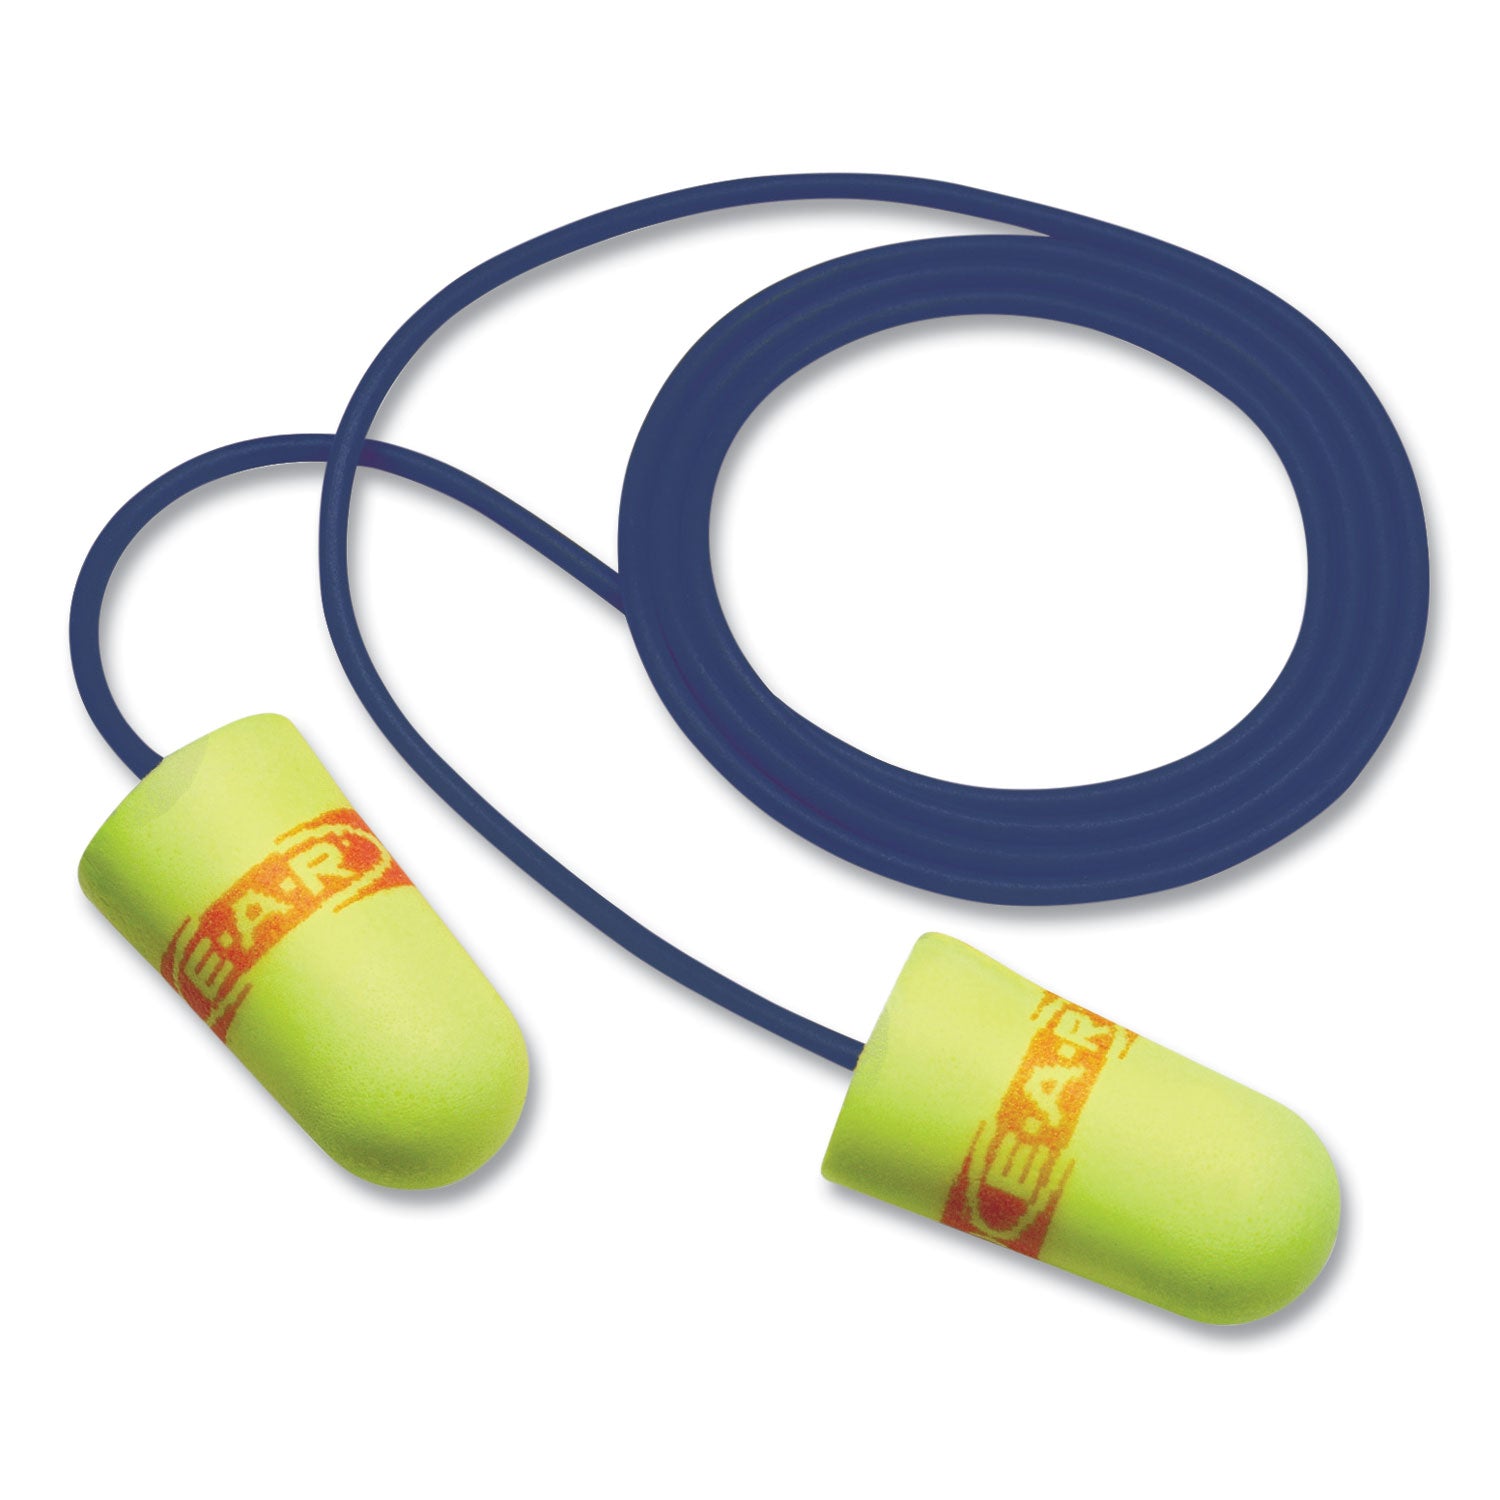 e-a-rsoft-metal-detectable-soft-foam-earplugs-32-db-nrr-yellow-200-box_mmm3114109 - 1